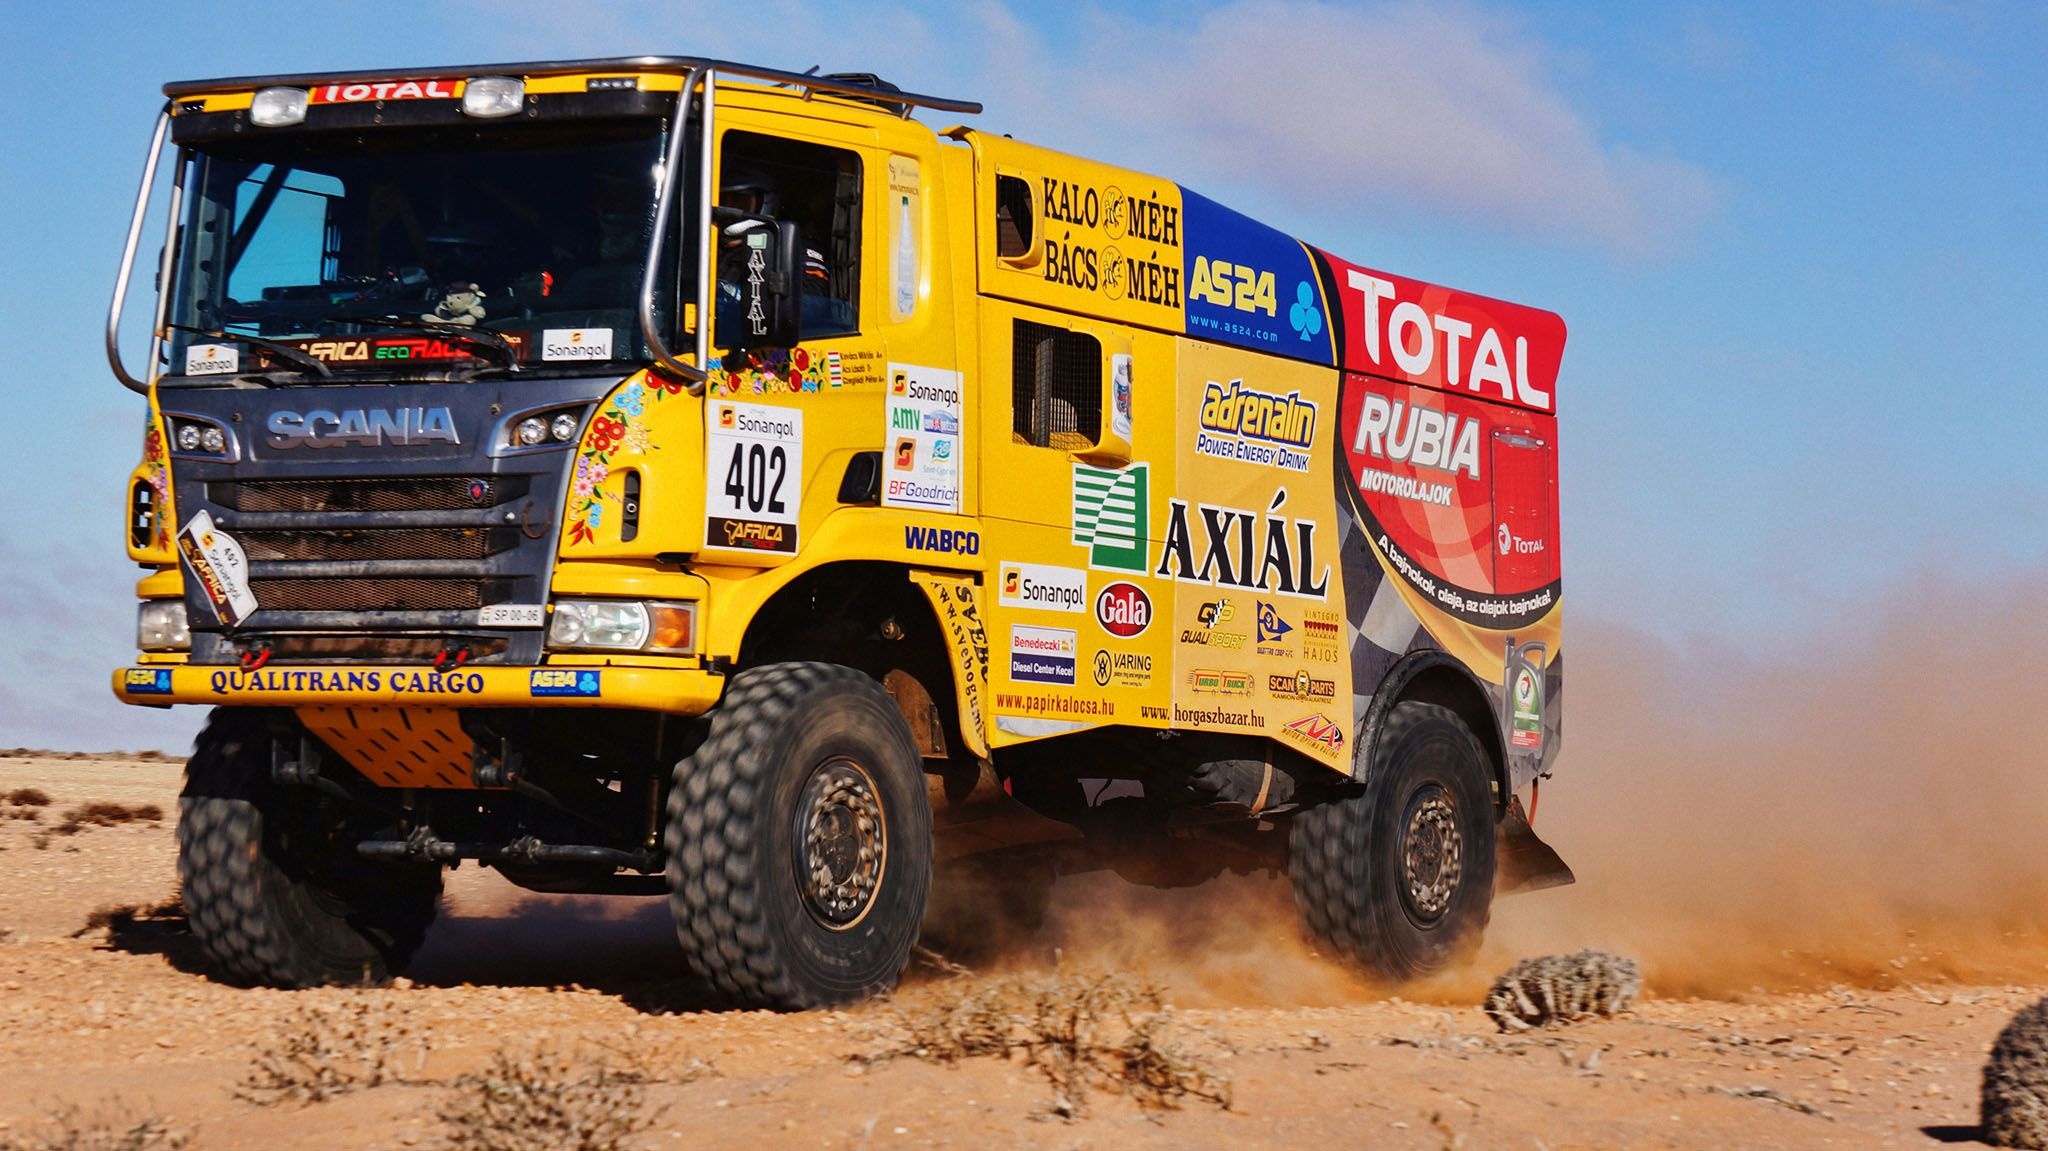 Rally Raid: Qualitrans Cargo, Scania Truck, Powerful Engine, Harsh Desert Conditions, Sport Utility Vehicle. 2050x1160 HD Wallpaper.